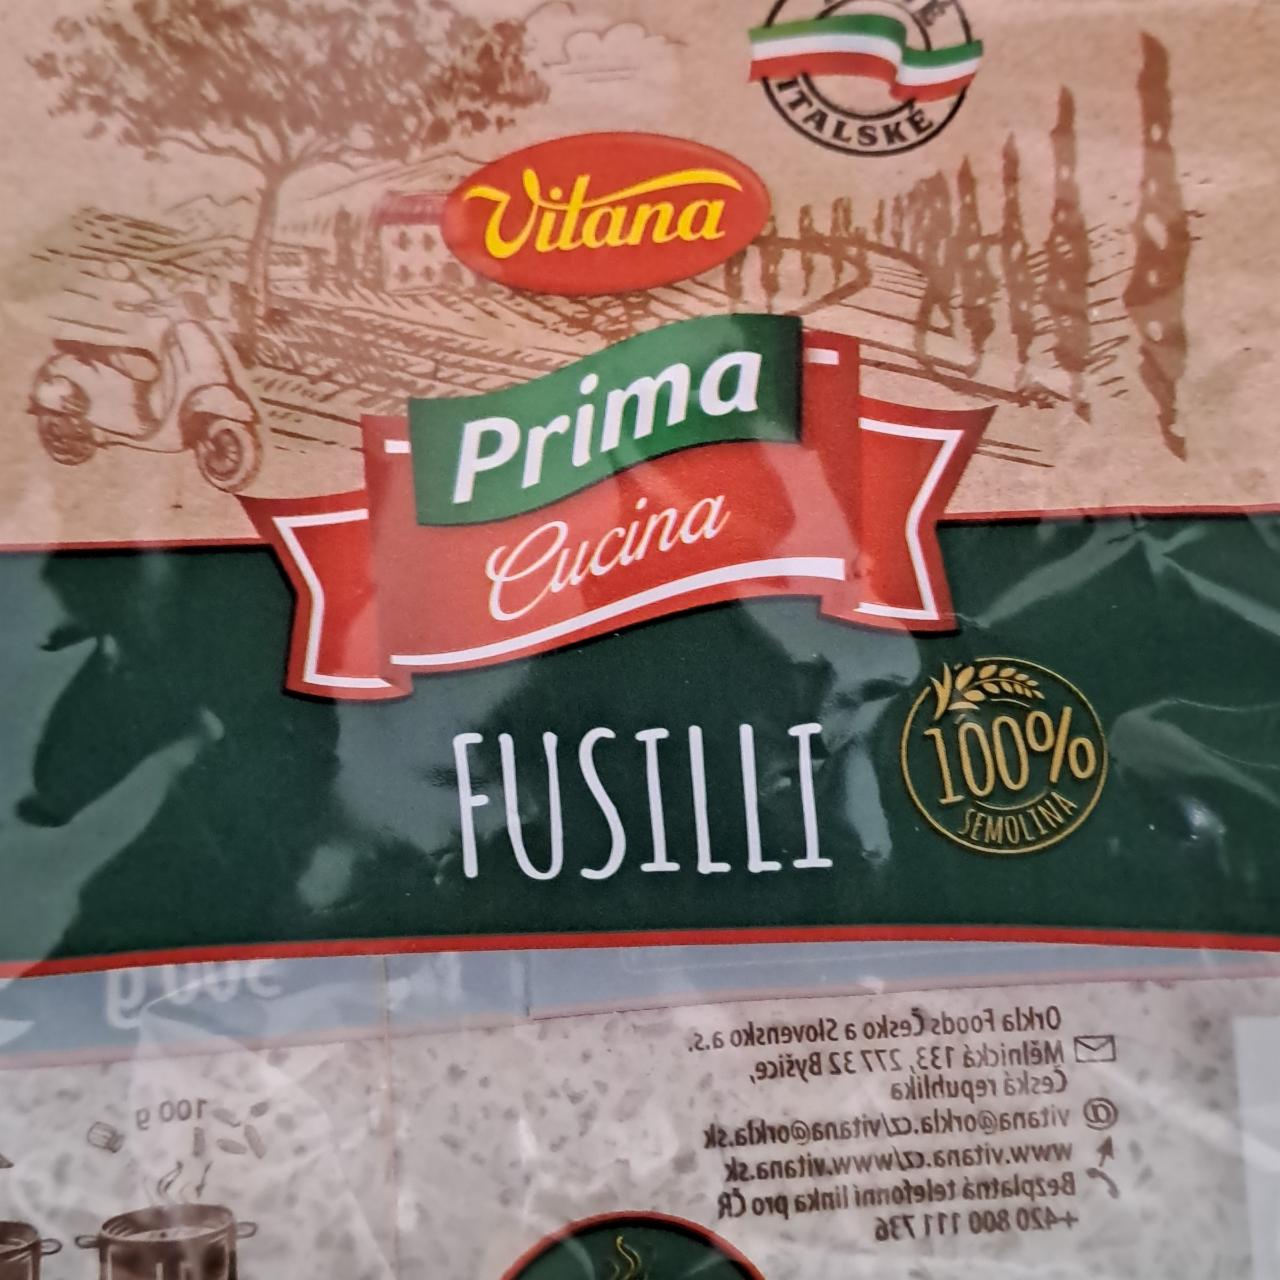 Fotografie - Prima Cucina Fusilli Vitana